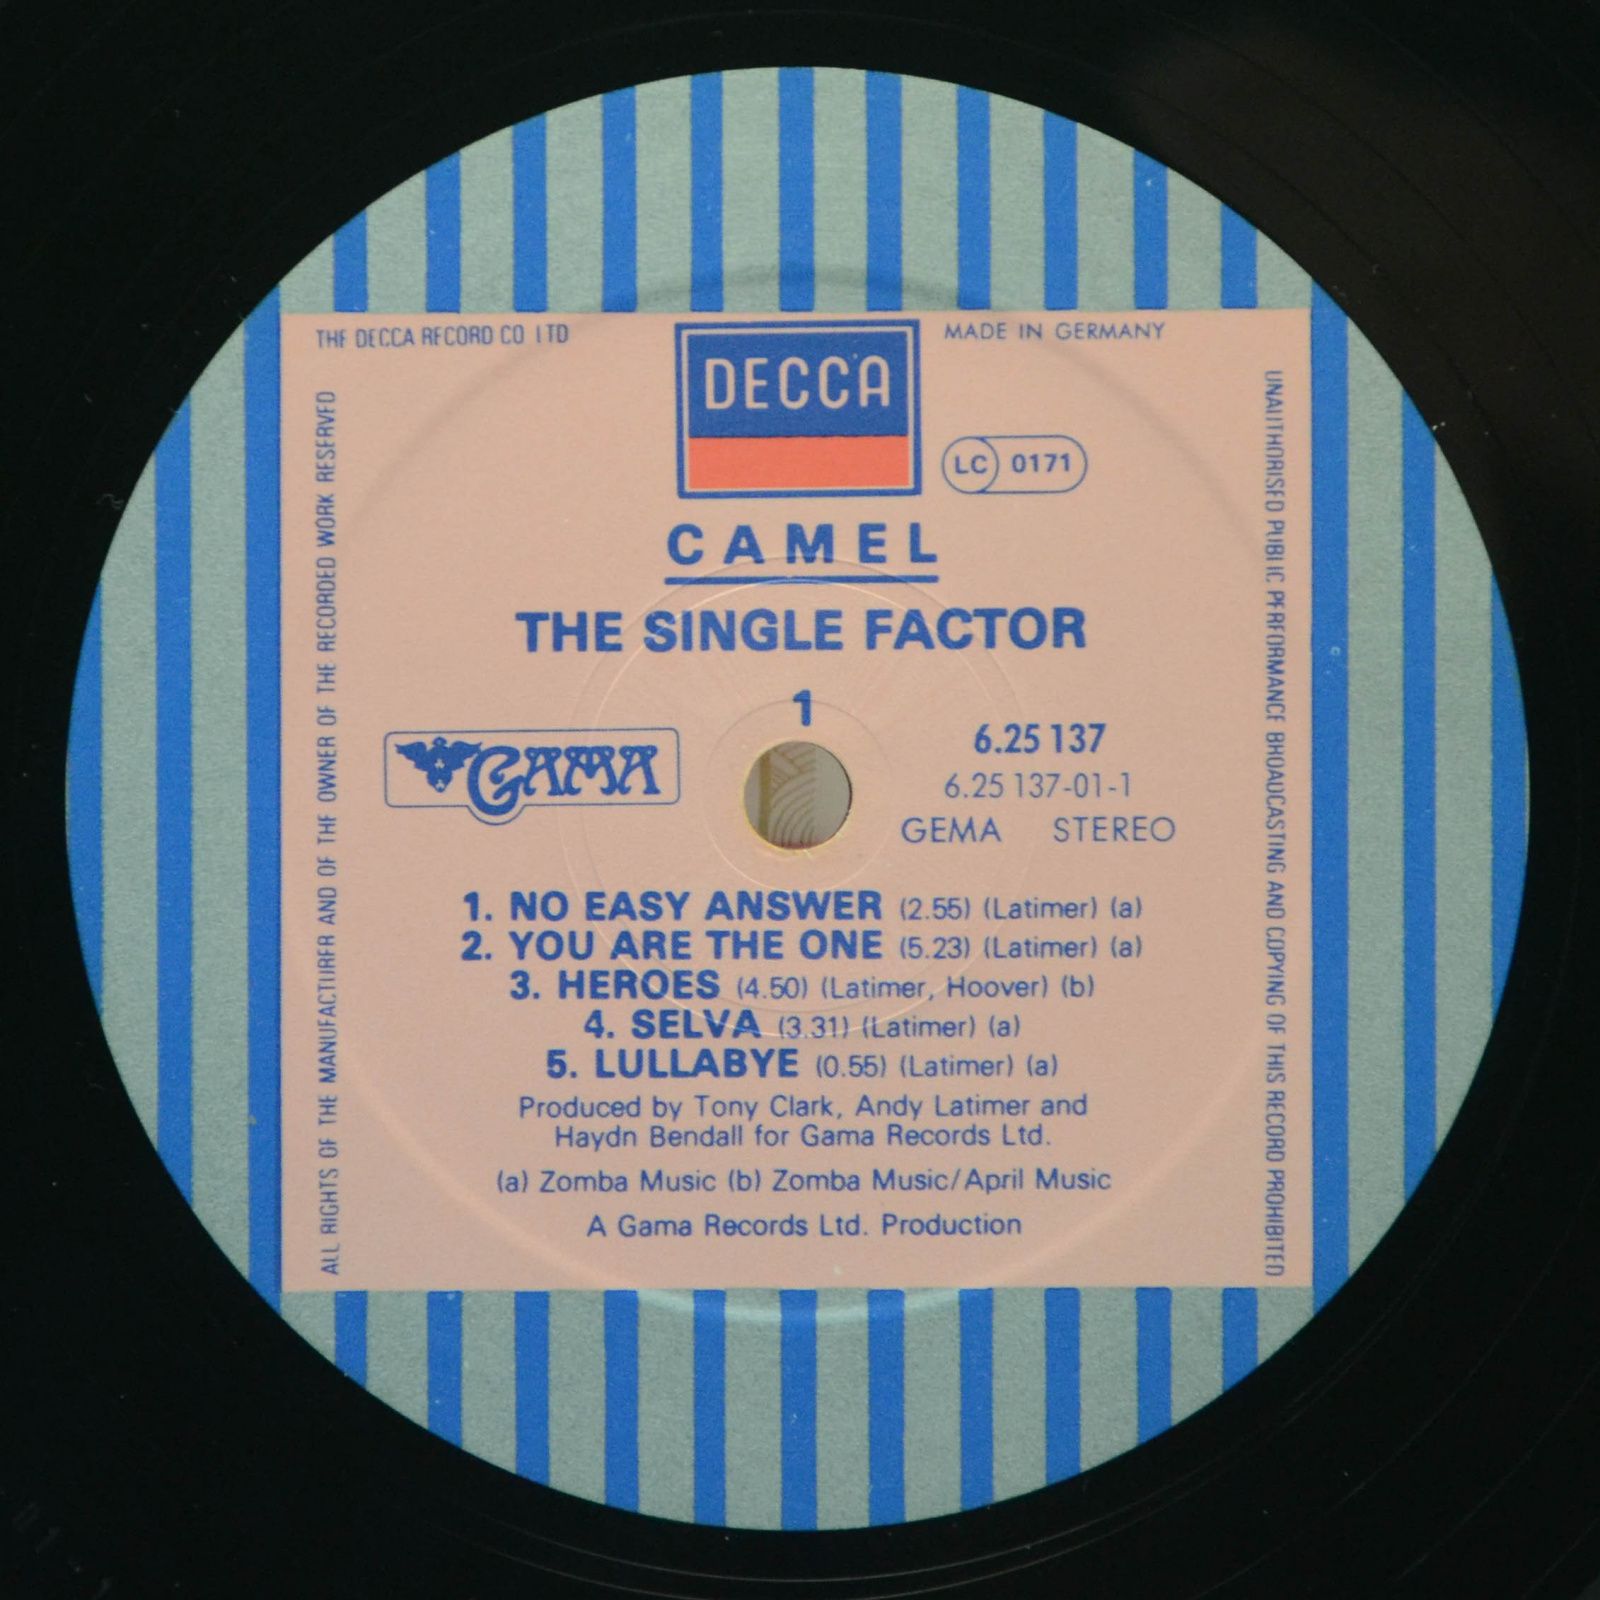 Camel — The Single Factor, 1982